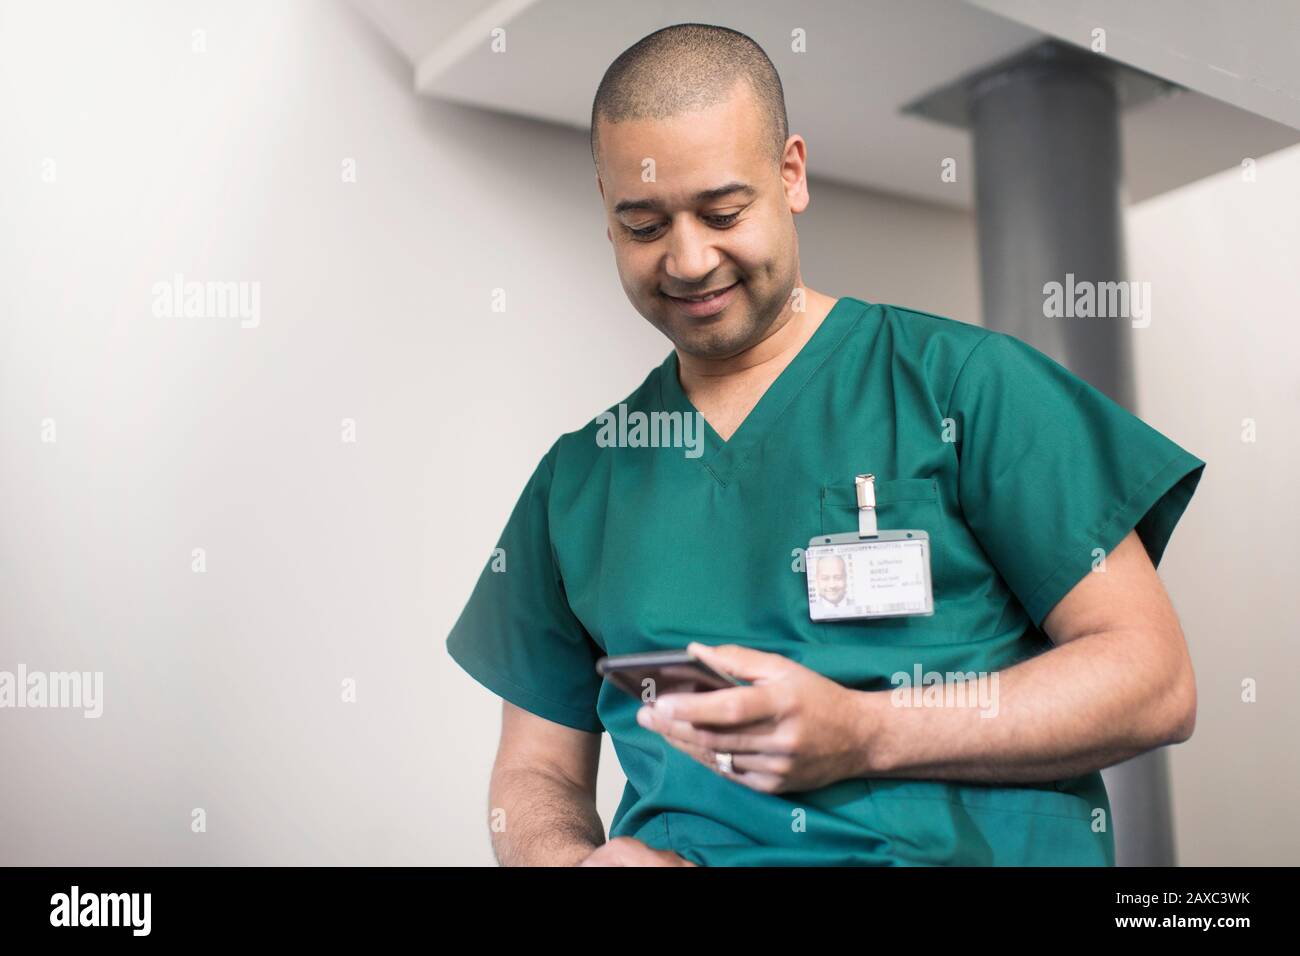 Male surgeon using smart phone Stock Photo